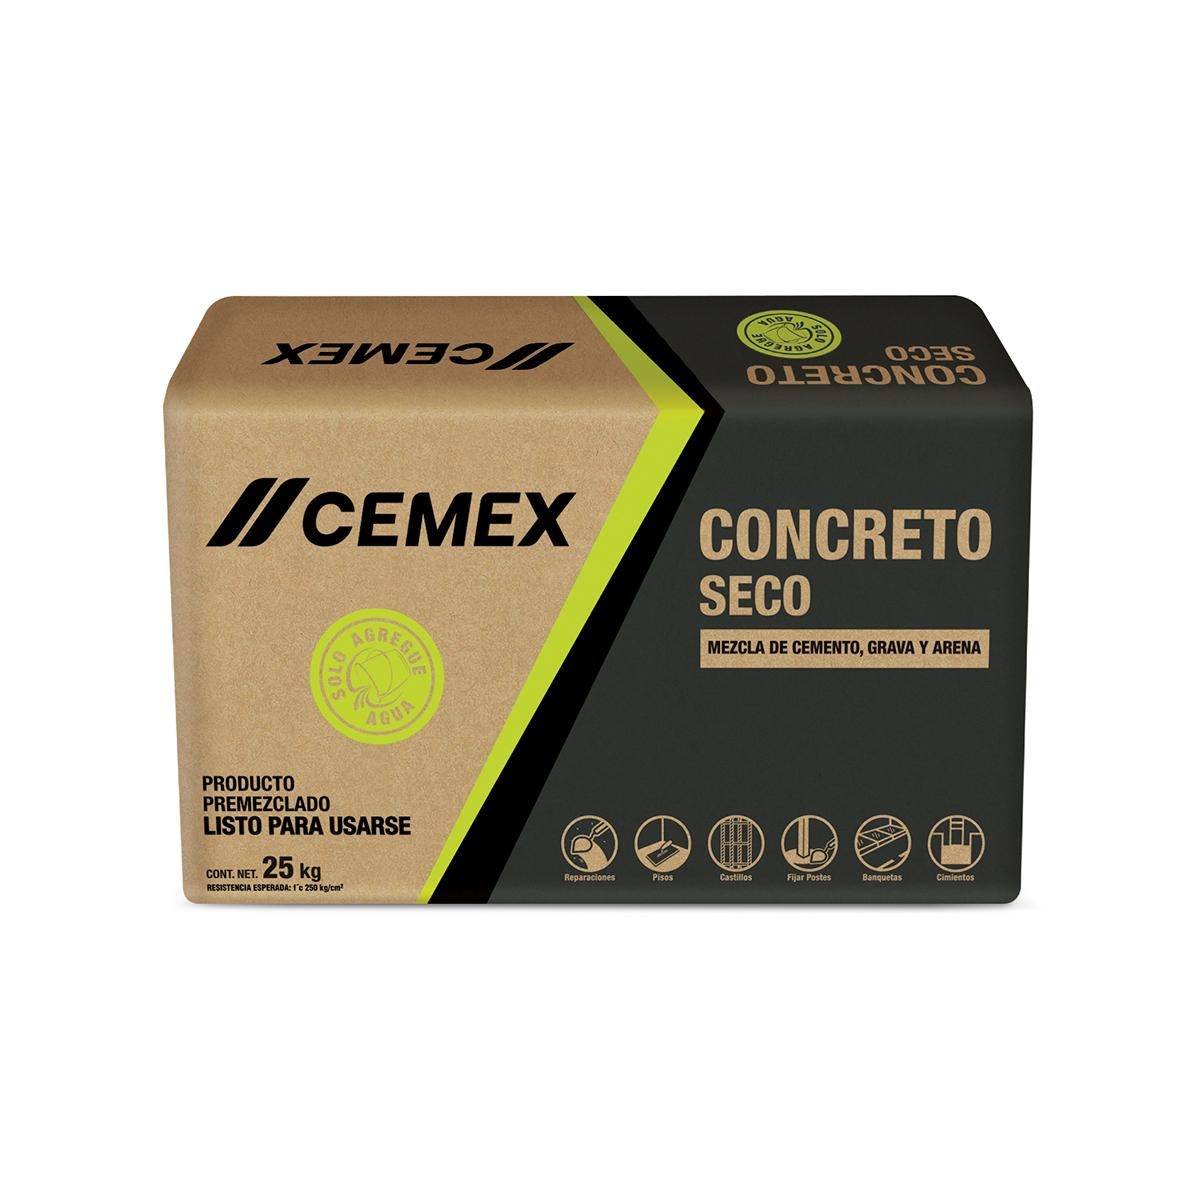 CONCRETO SECO PREMEZCLADO CEMEX 25 KG The Home Depot México